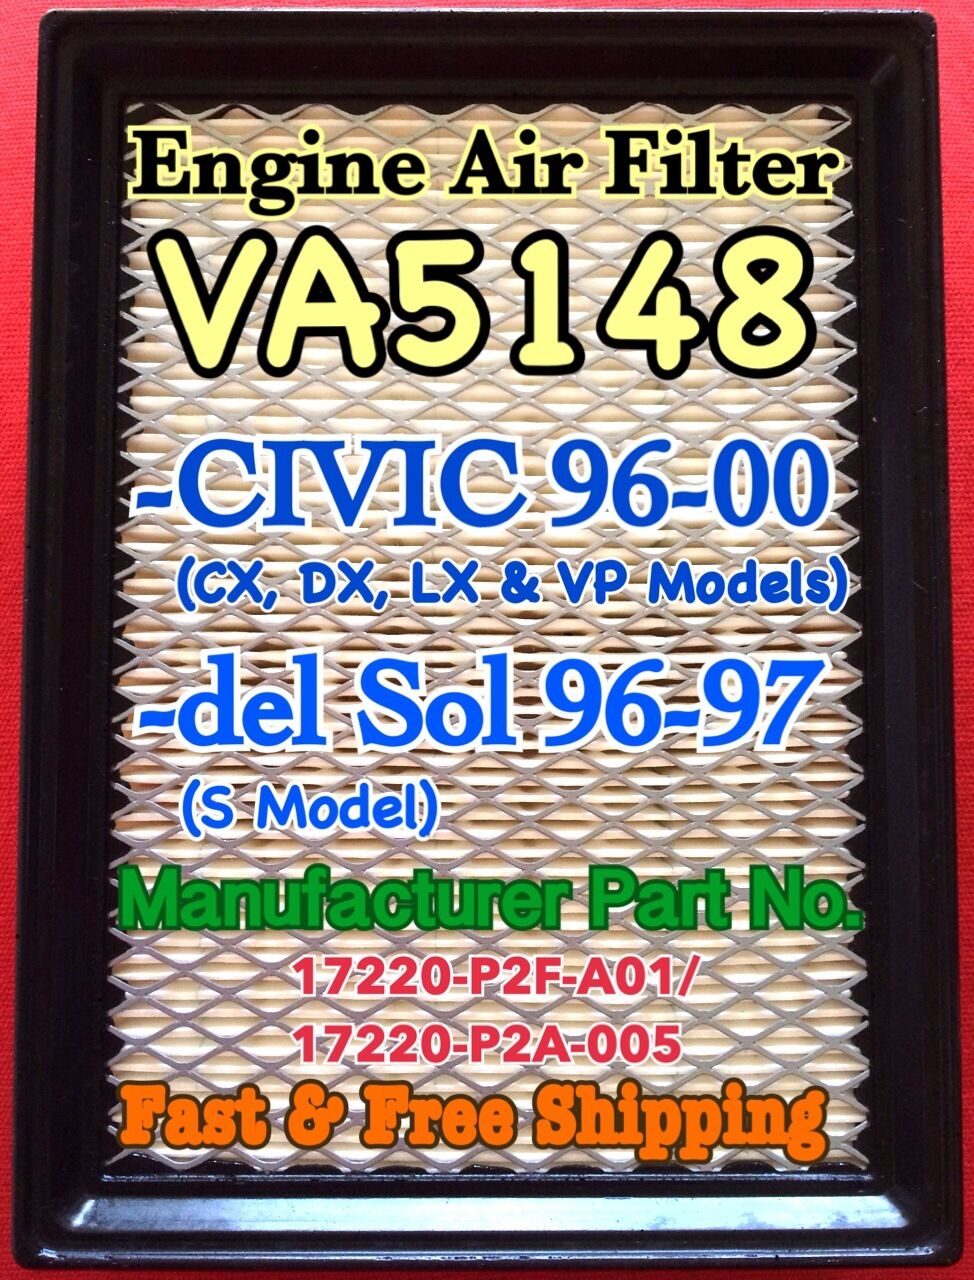 Engine Air Filter For Civic(96-00) del Sol(96-97)  VA5148 Fast & 